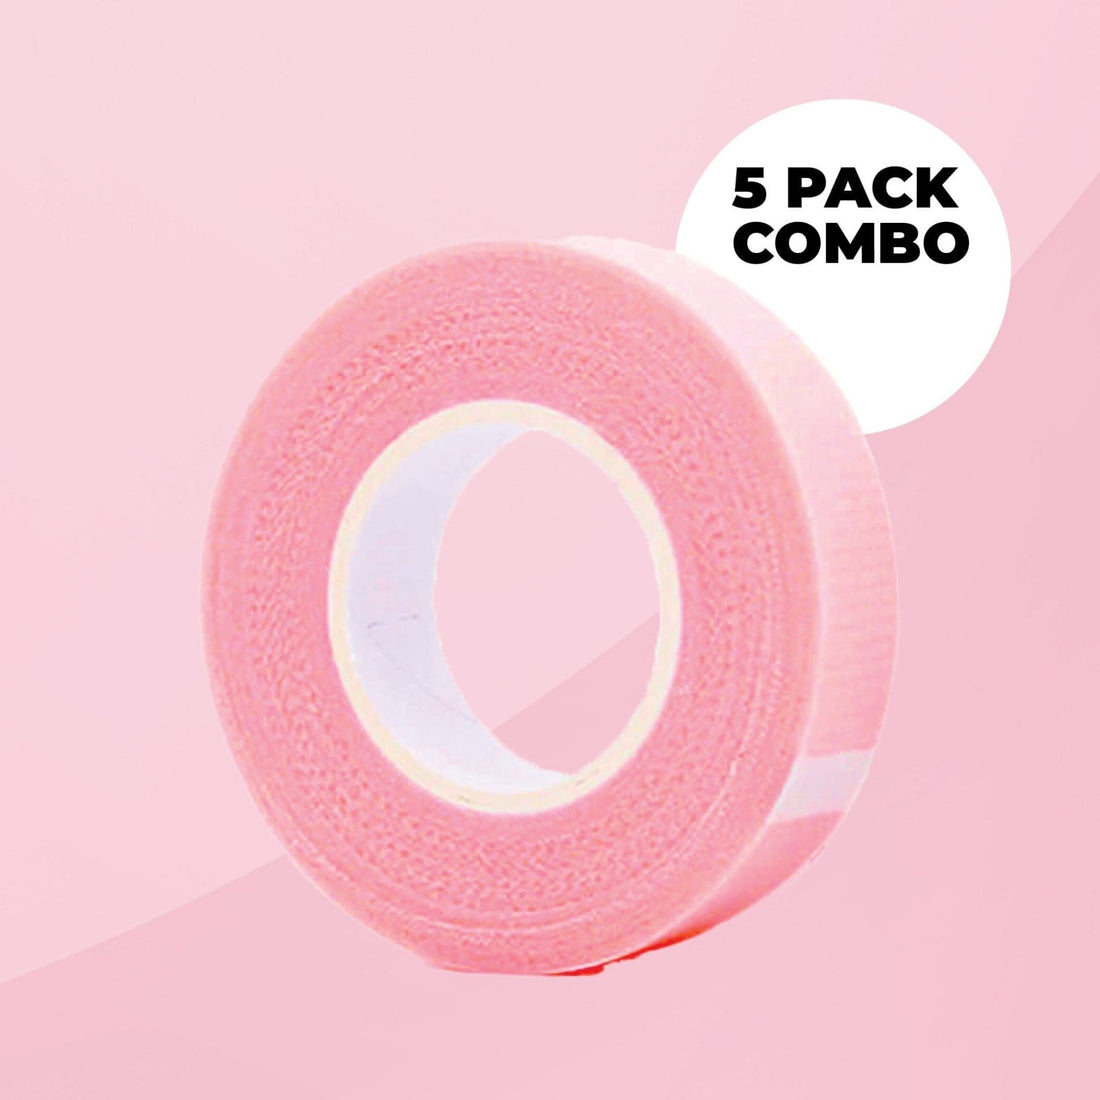 Pink Lash Tape - Breathable | Eyelash Salon Supplies - One V Salon